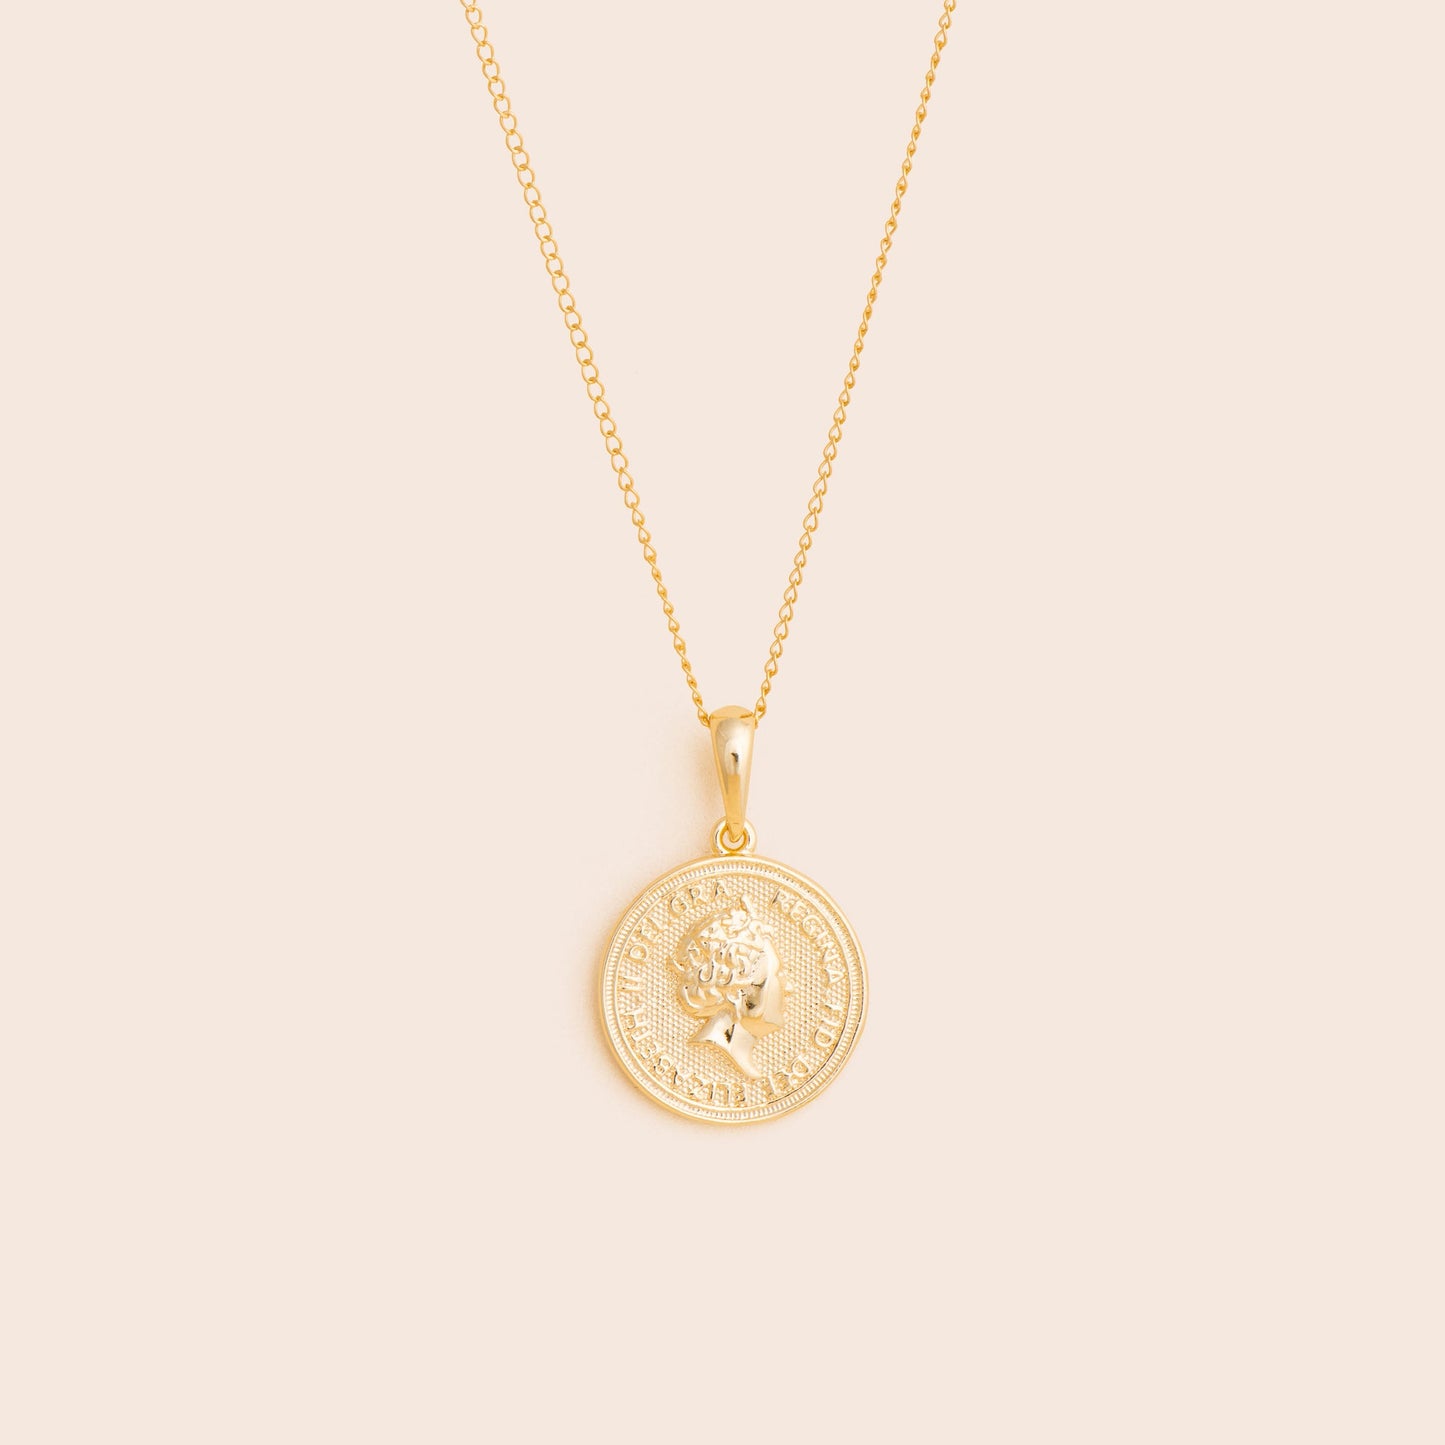 Queen Elizabeth Medallion Necklace - Gemlet